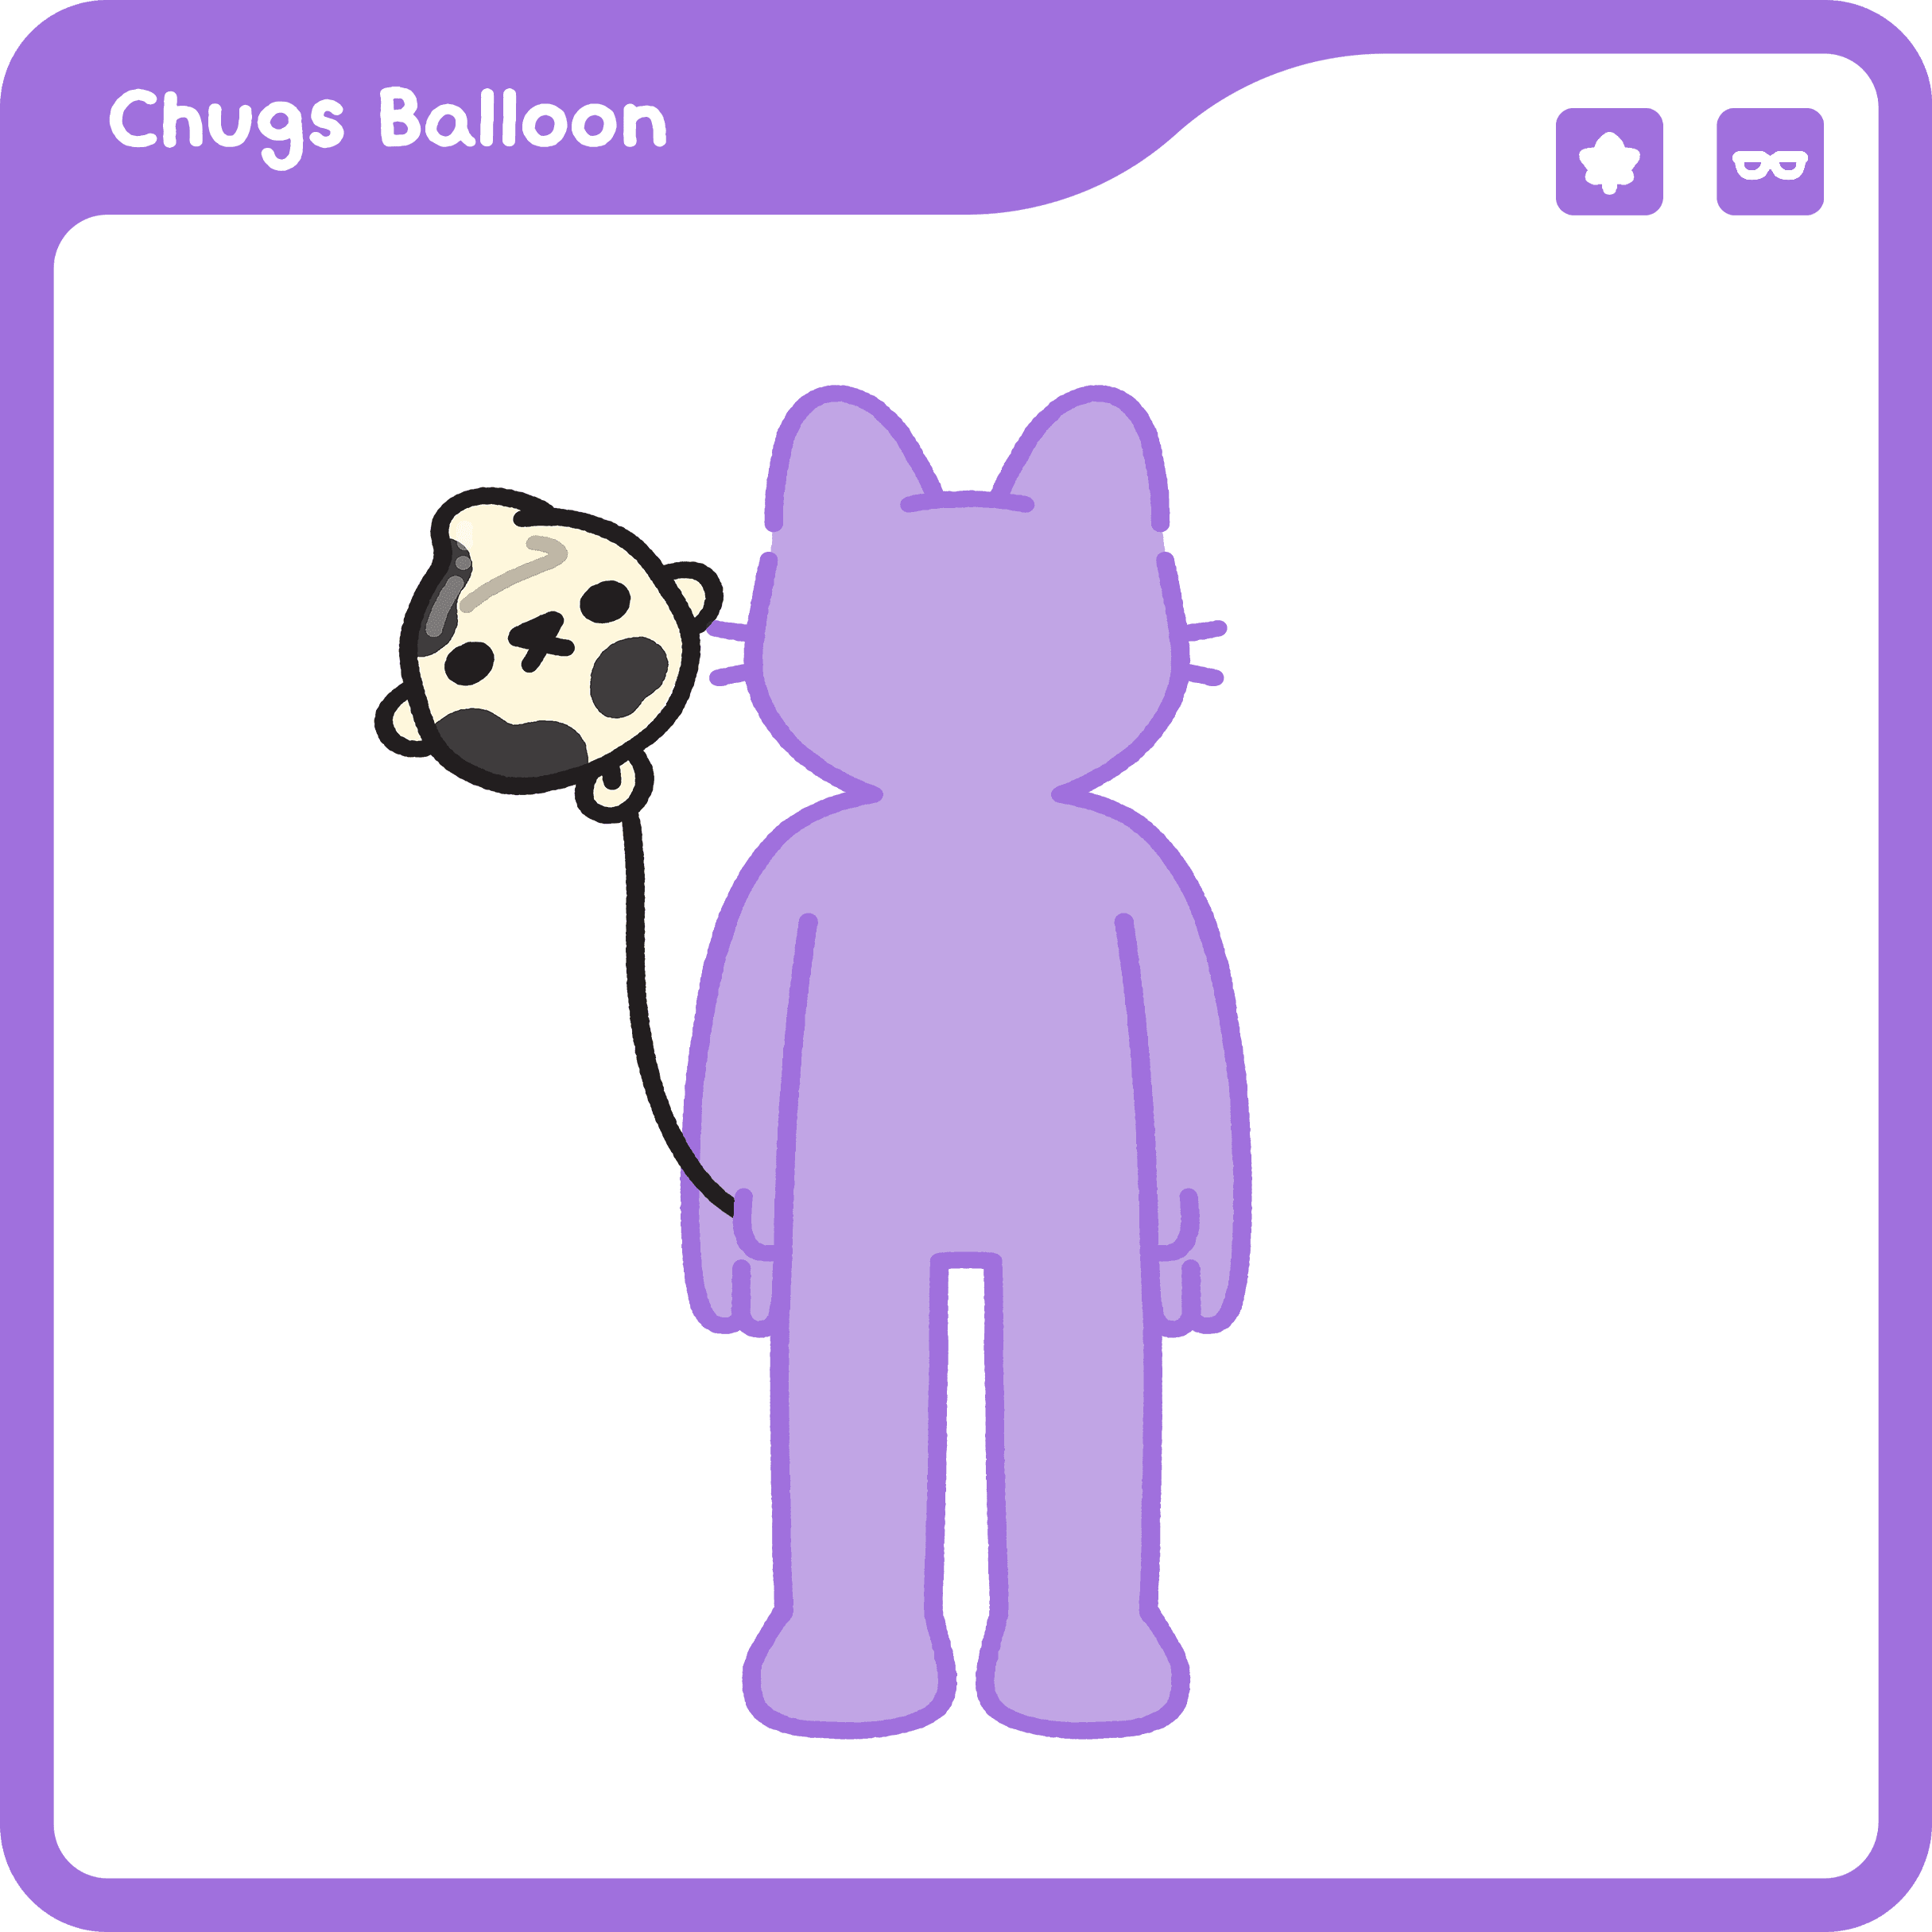 Chugs Balloon